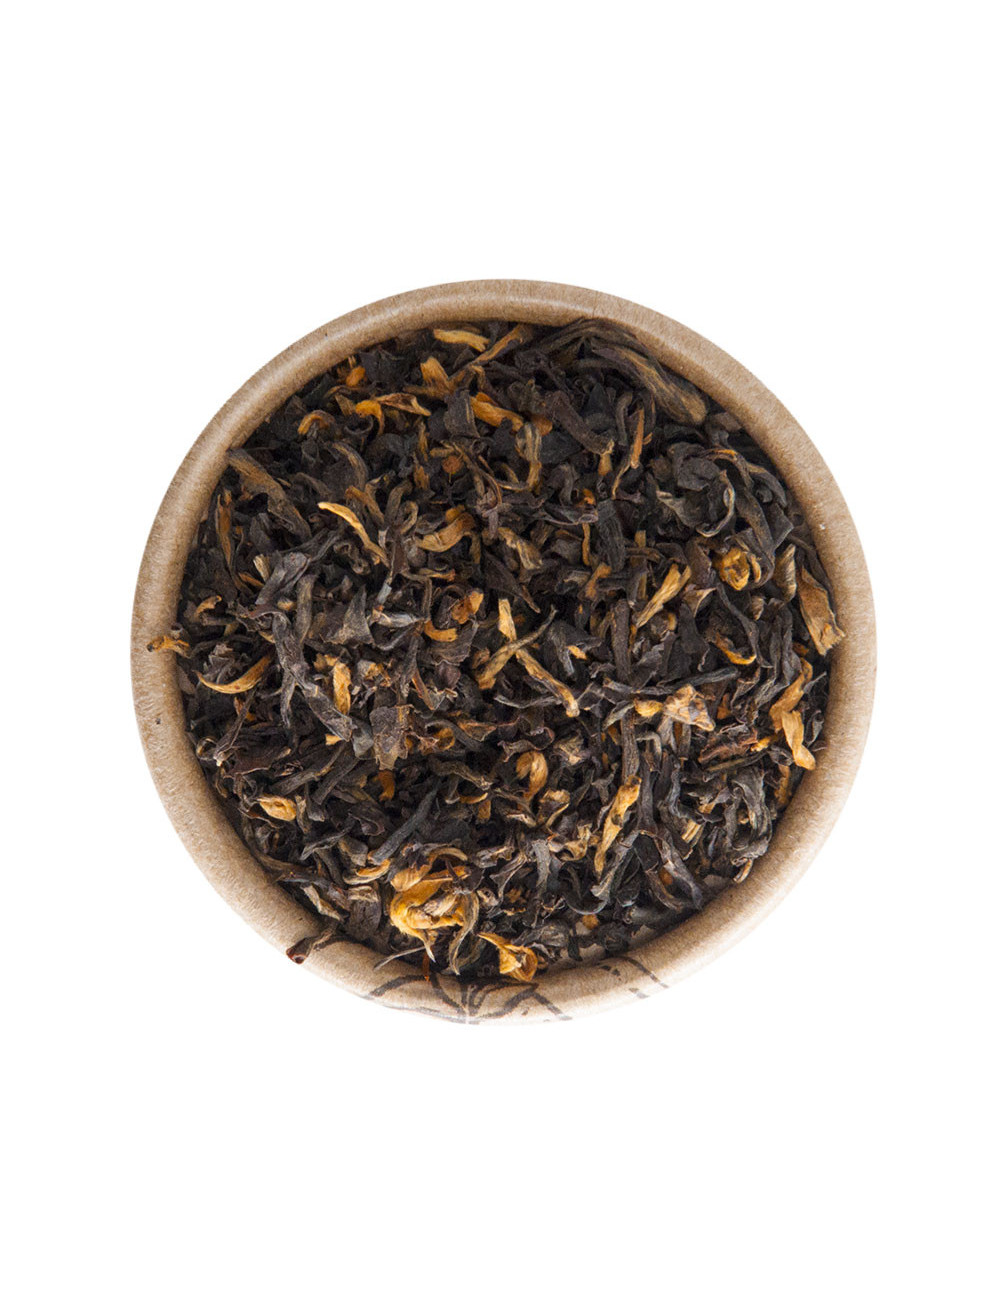 Assam Punte Dorate tè nero - La Pianta del Tè shop online